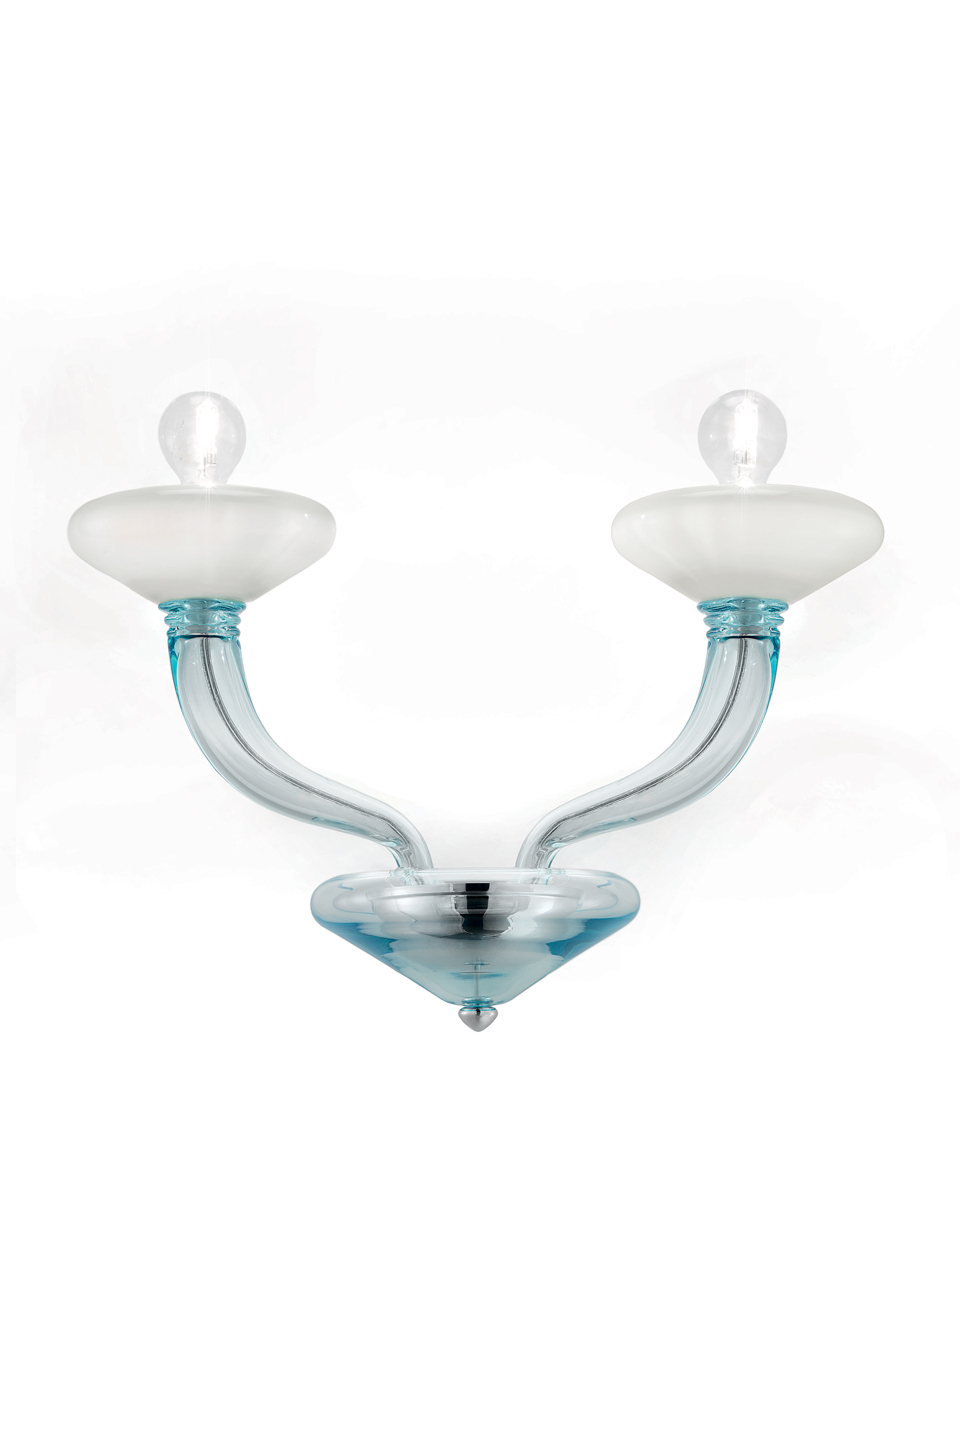 Windsor applique contemporaine épurée en cristal aquamarine. Barovier&Toso. 